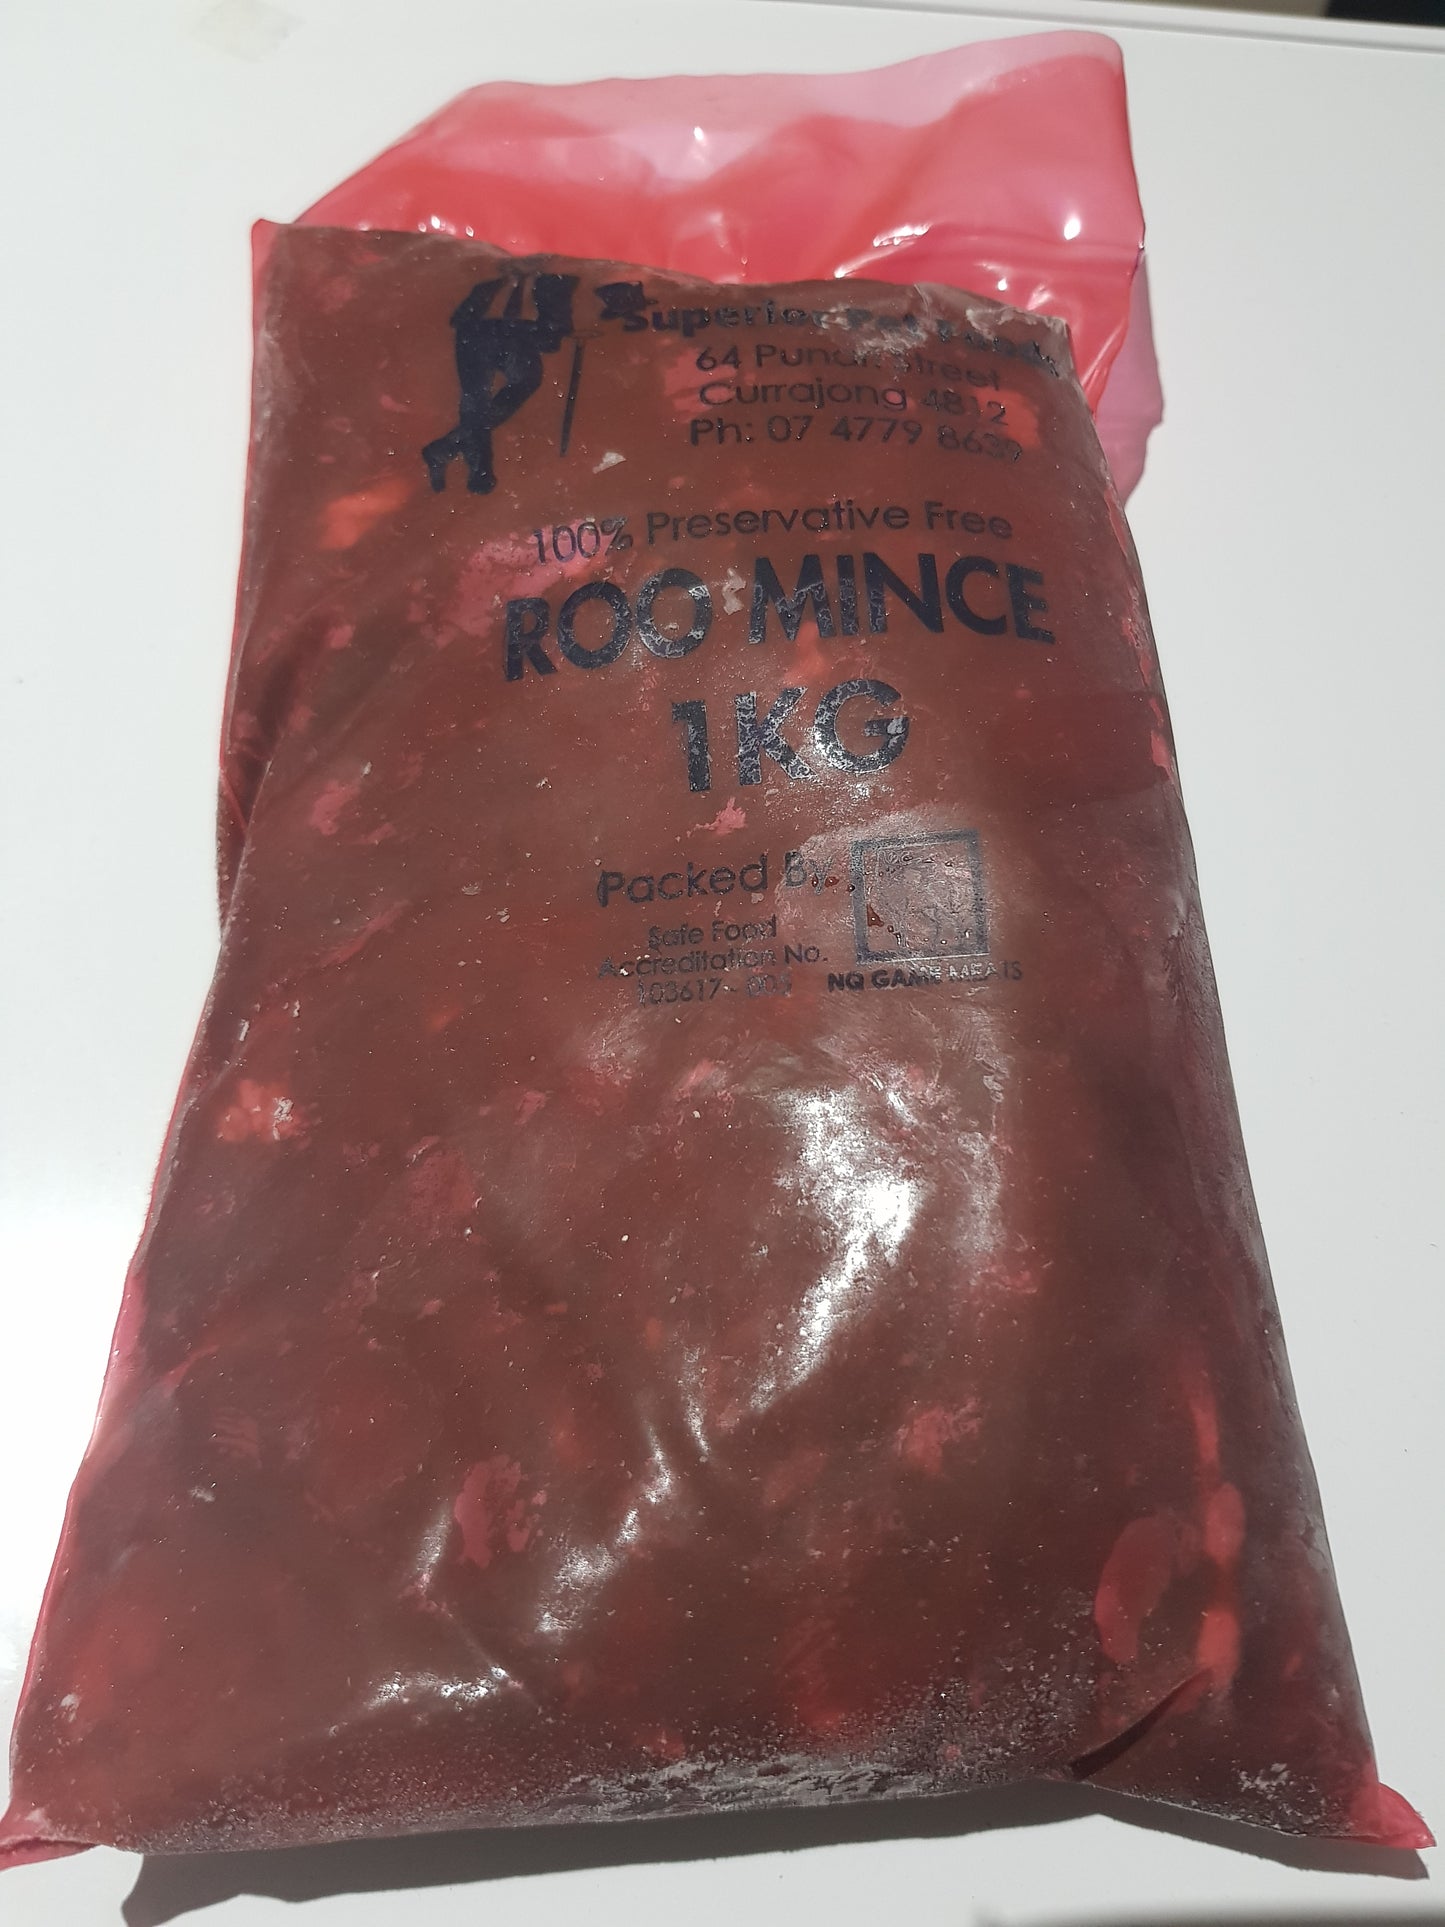 Roo Mince (1kg)